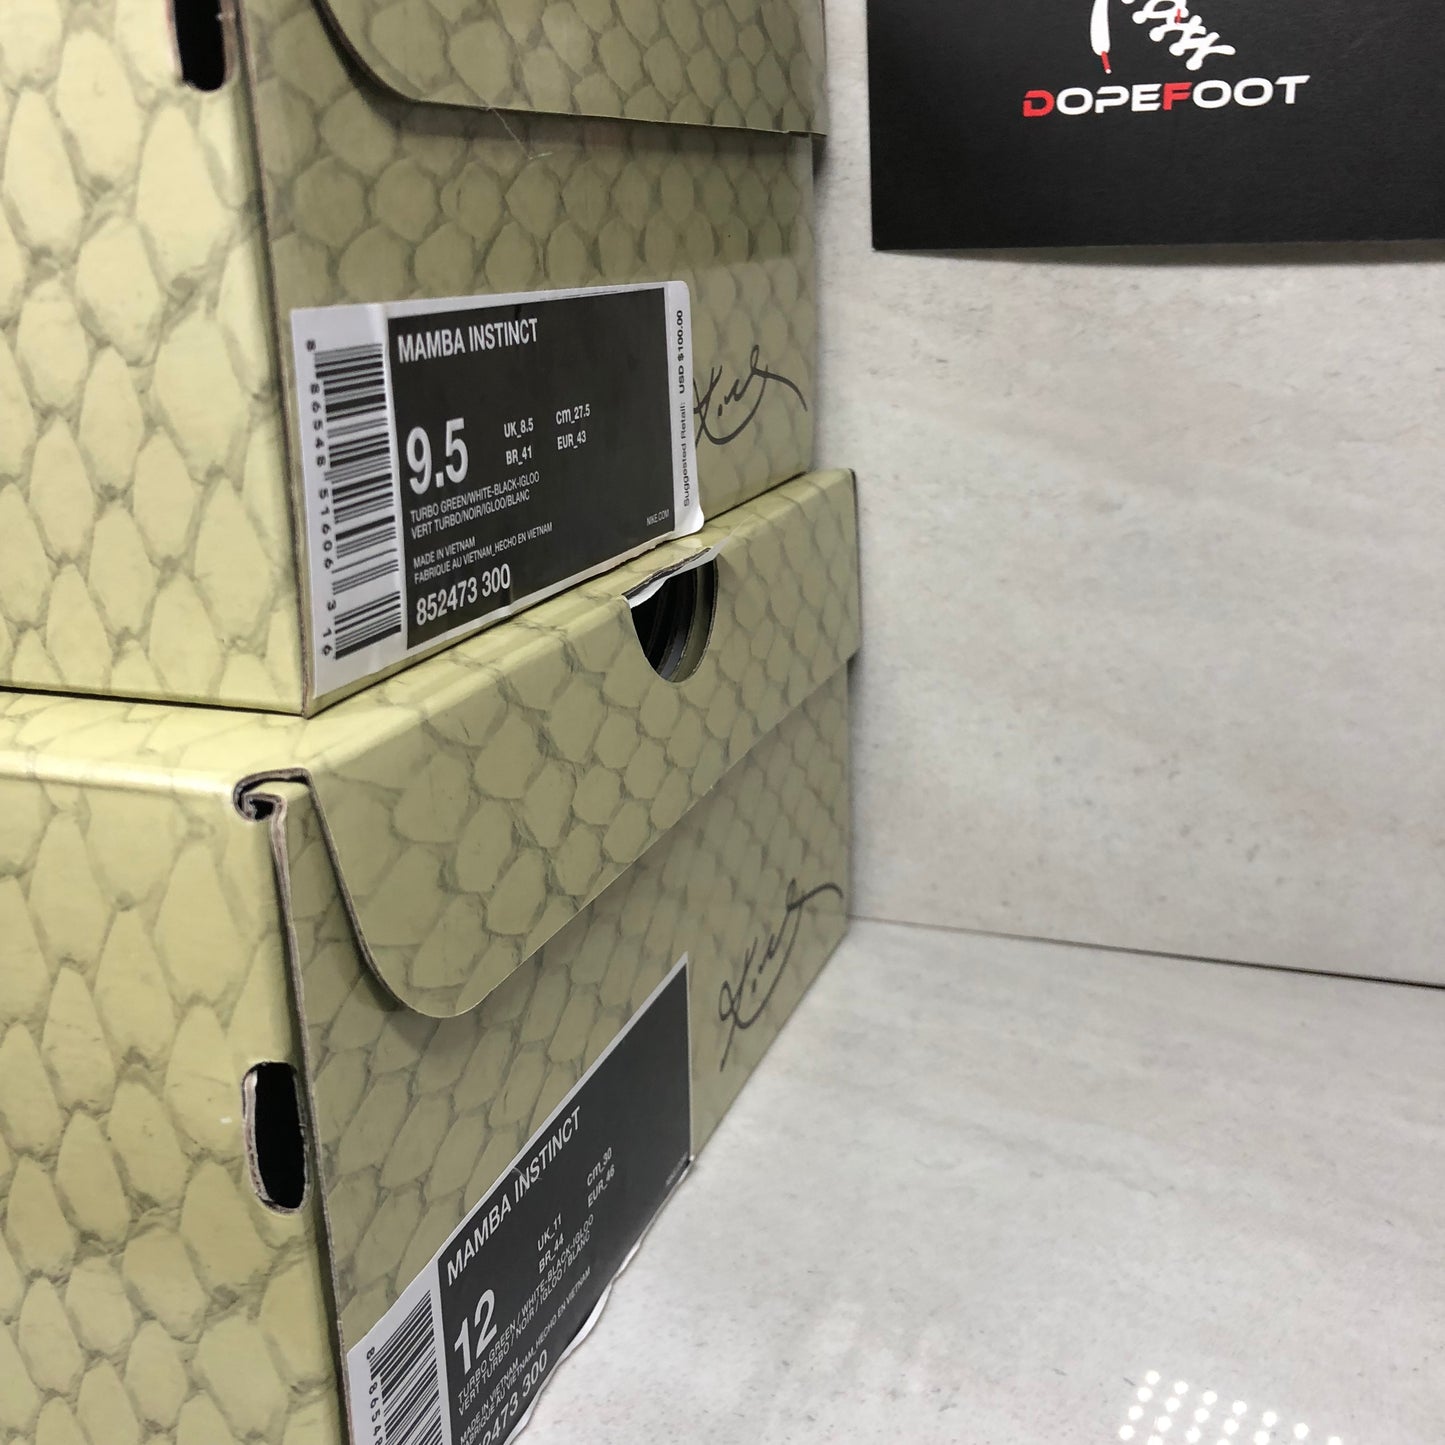 DS Nike Kobe Mamba Instinct Size 9.5/Size 12/Size 14/Size 15 Turbo Green 852473 300